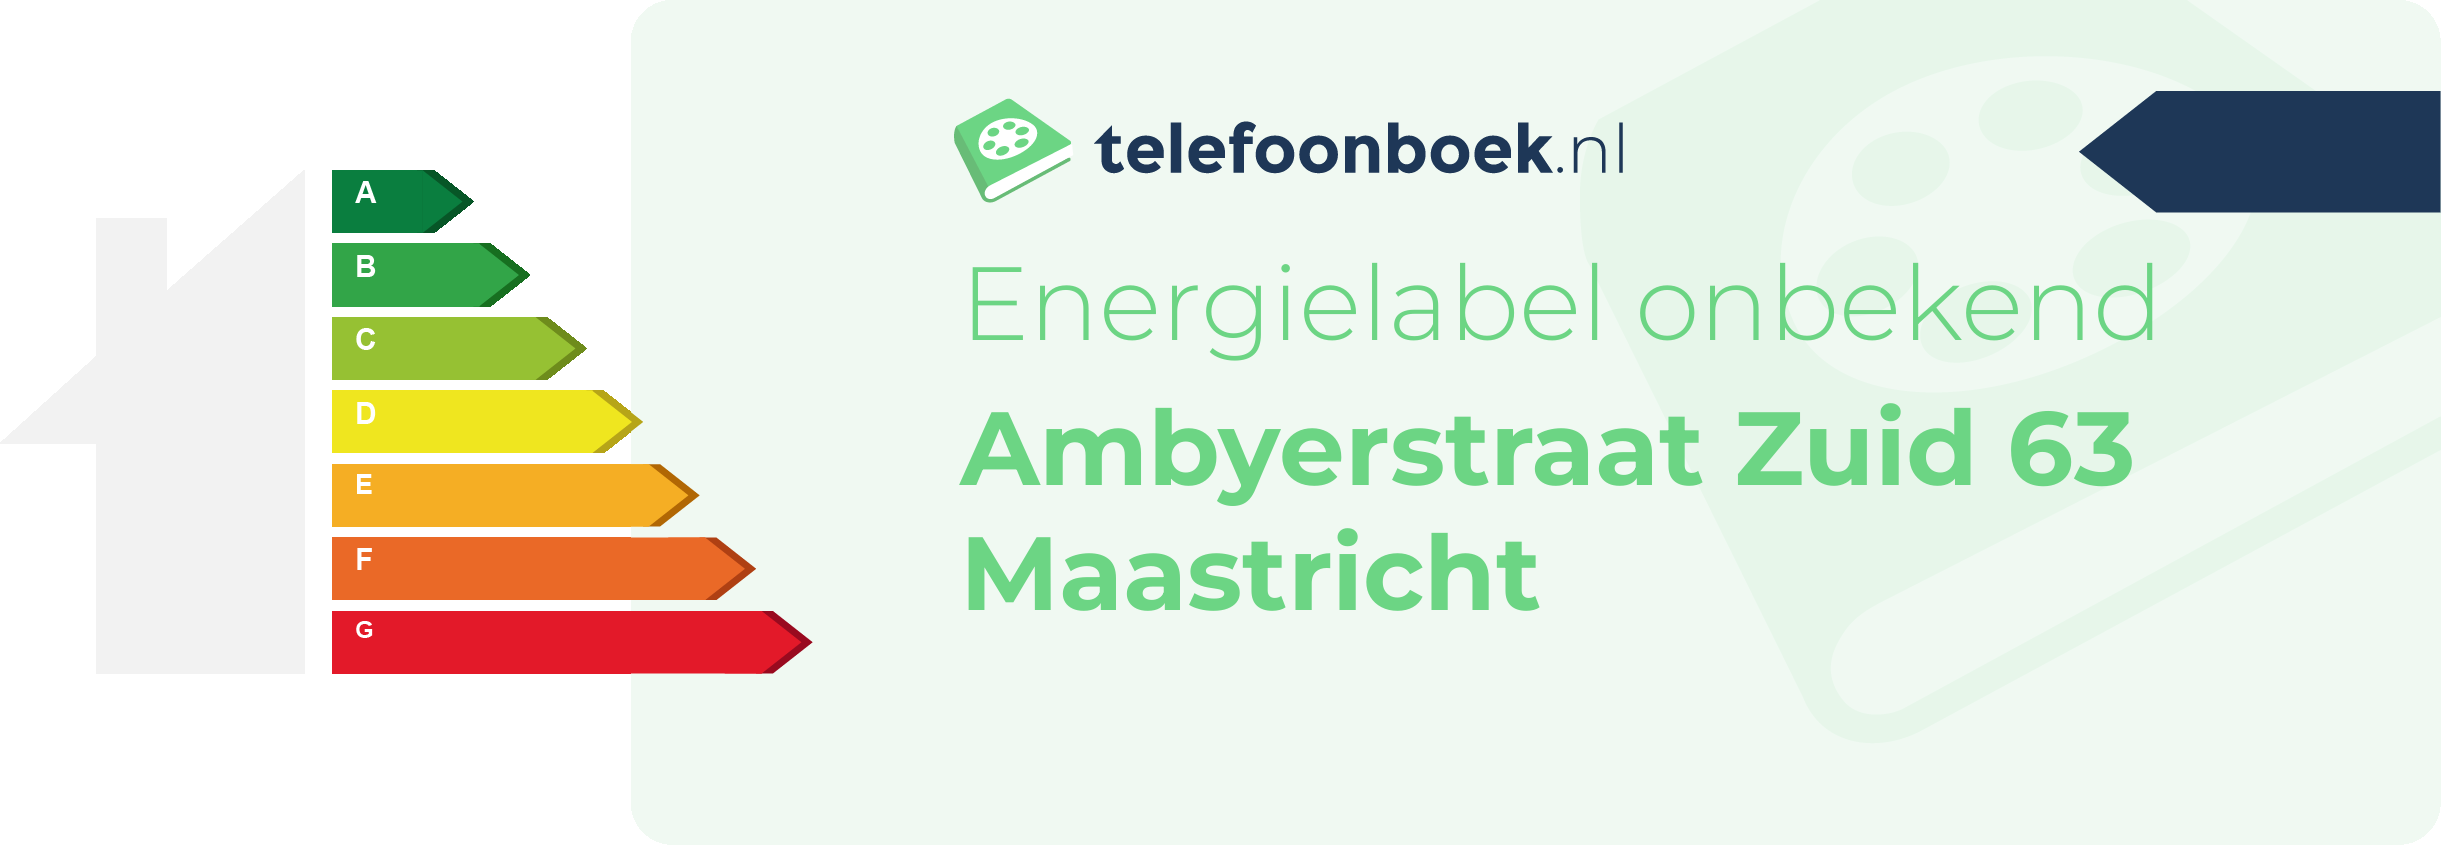 Energielabel Ambyerstraat Zuid 63 Maastricht